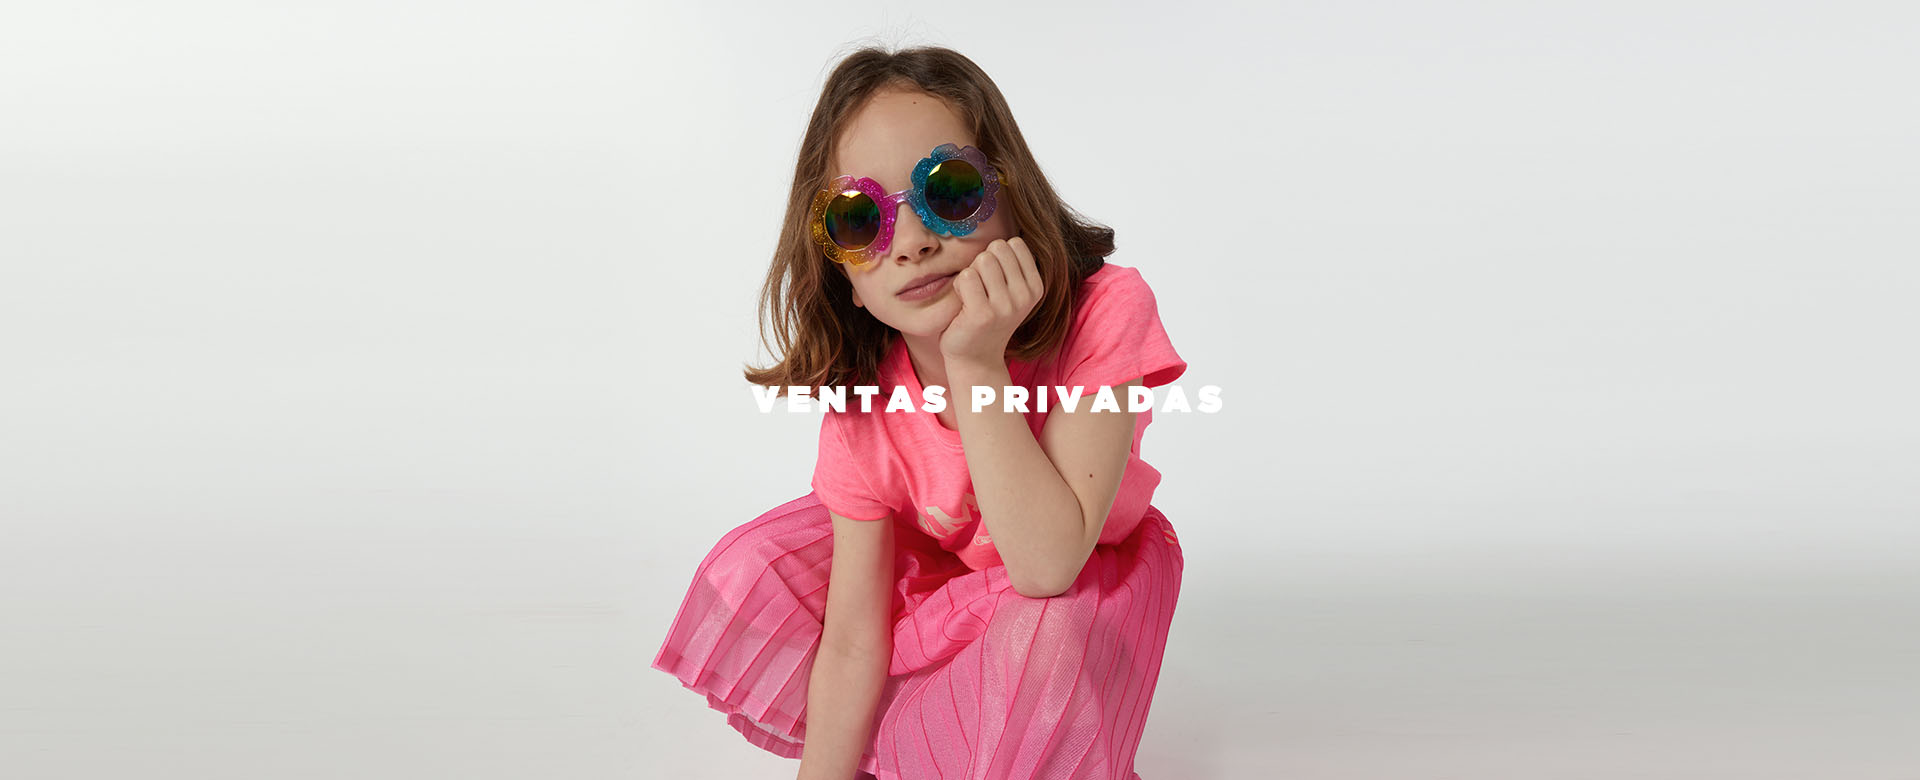 venta privada moda niños